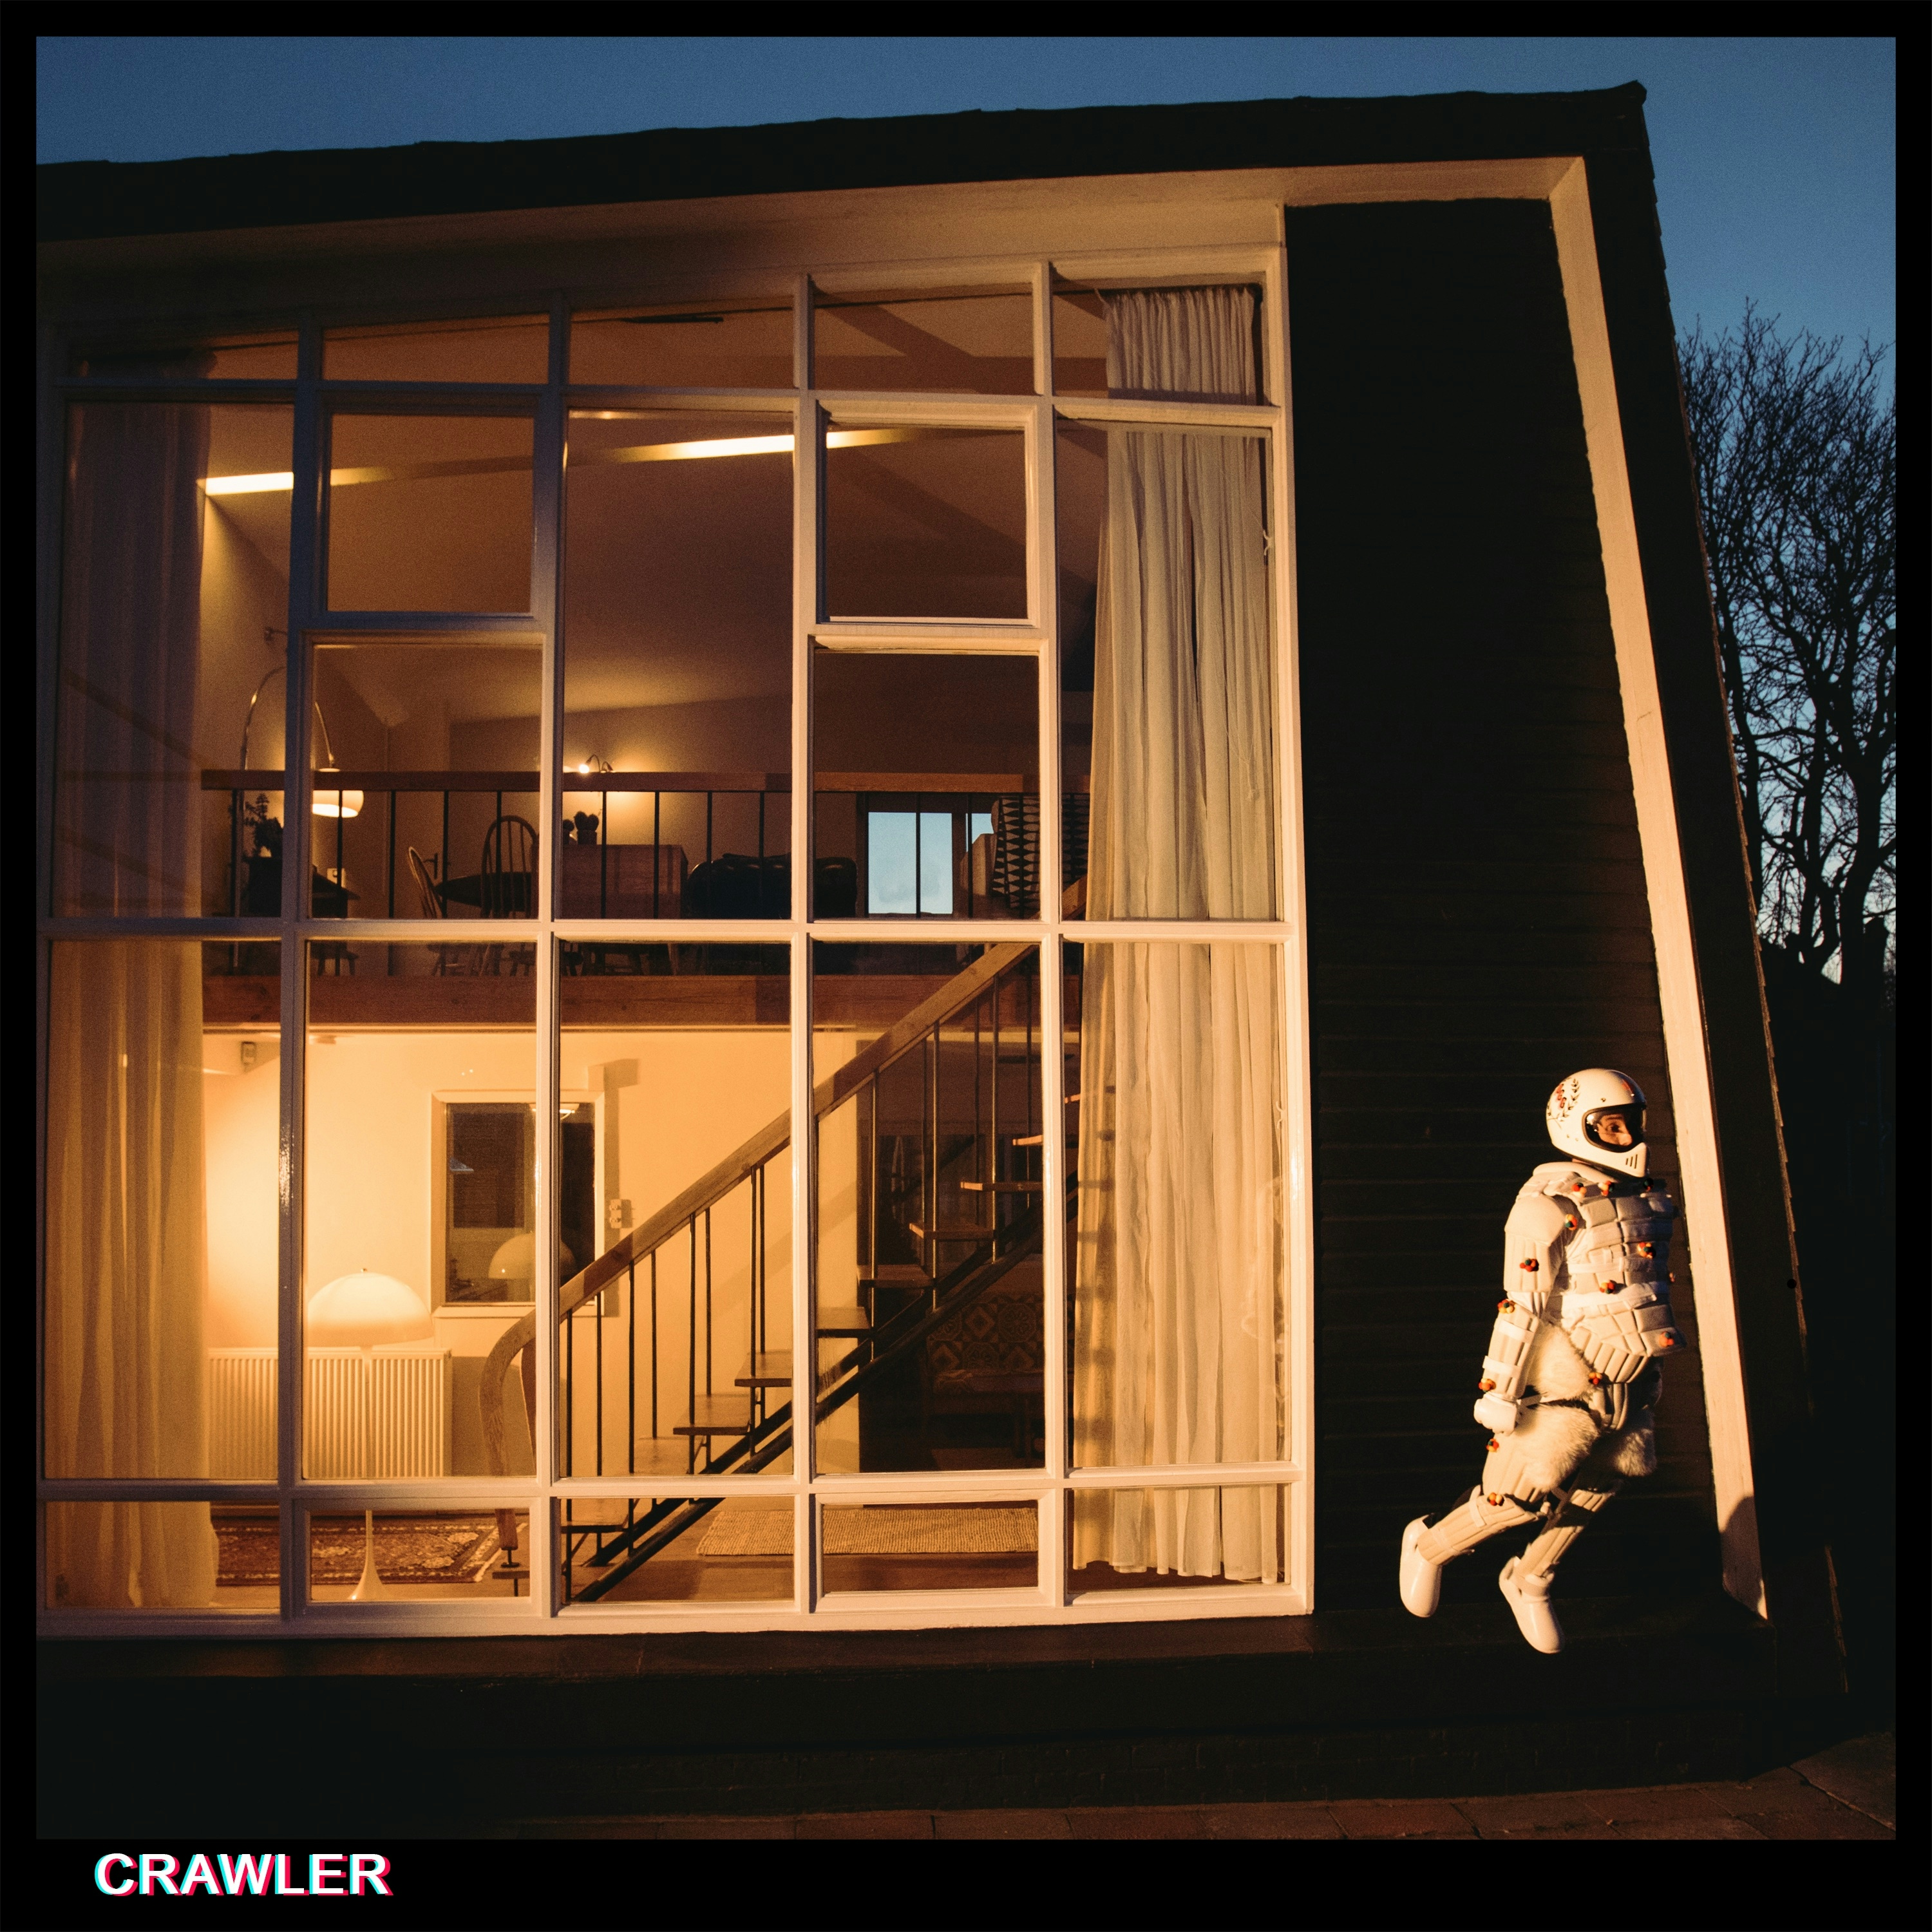 Album artwork for Crawler by IDLES